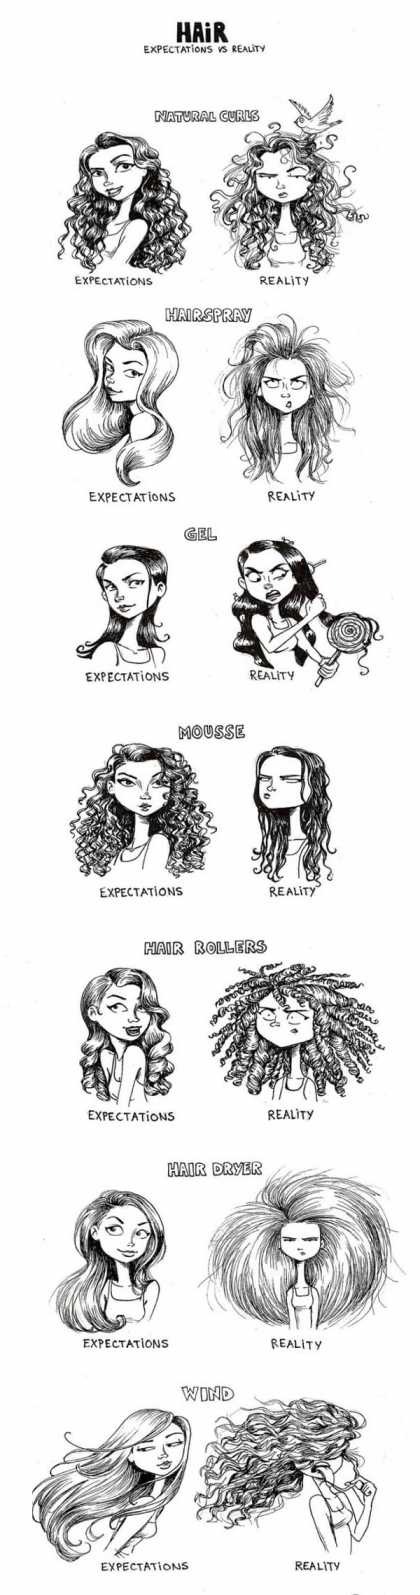 Women's hair expectations vs reality